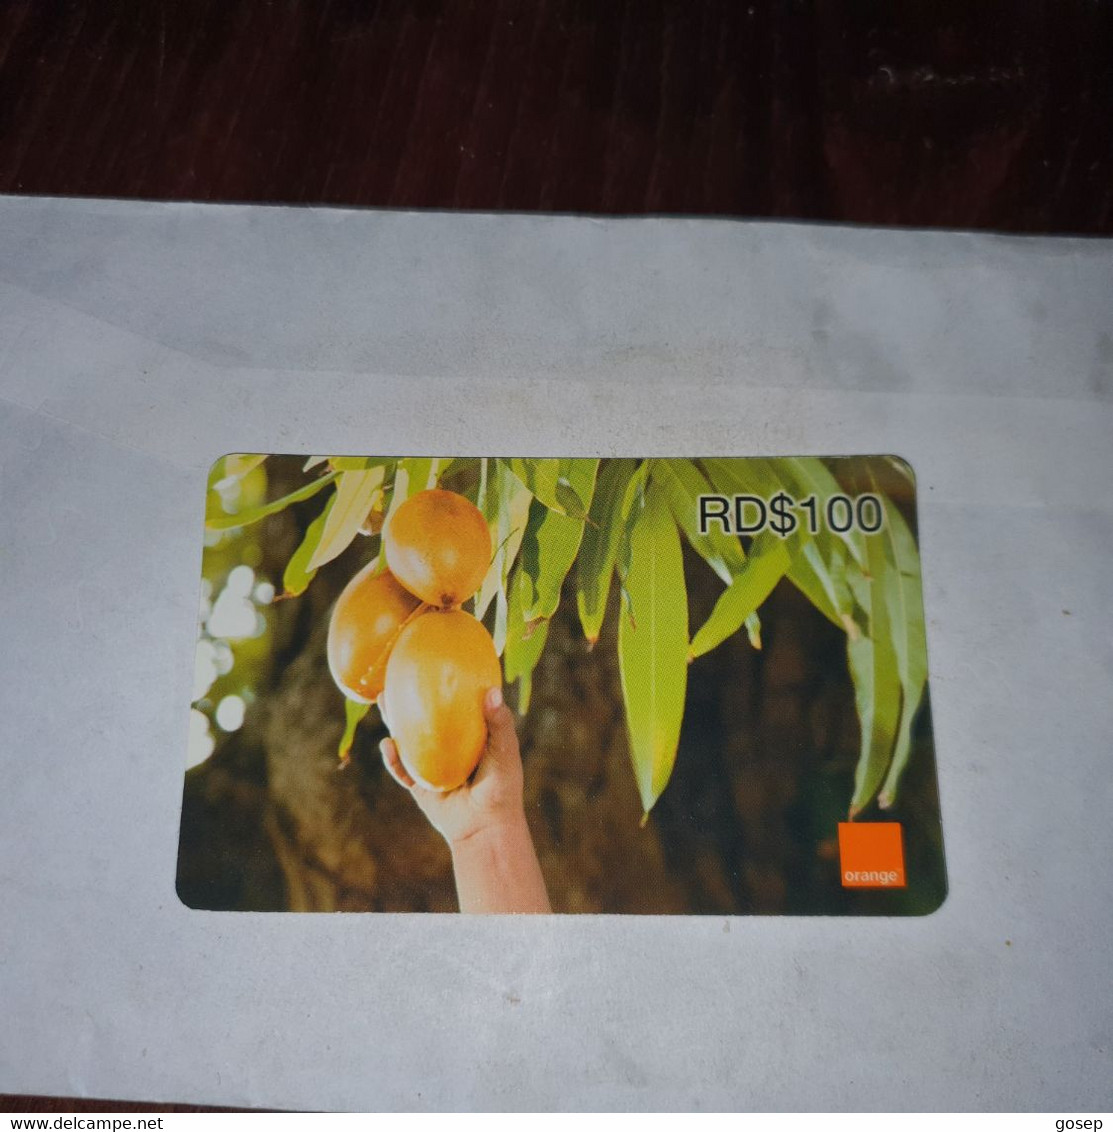 Dominicana-(orange-28rd$100)-(1581-5764-9681-15)-three Mango-(31)-(31.12.2009)-used Card+1card Prepiad Free - Dominicana